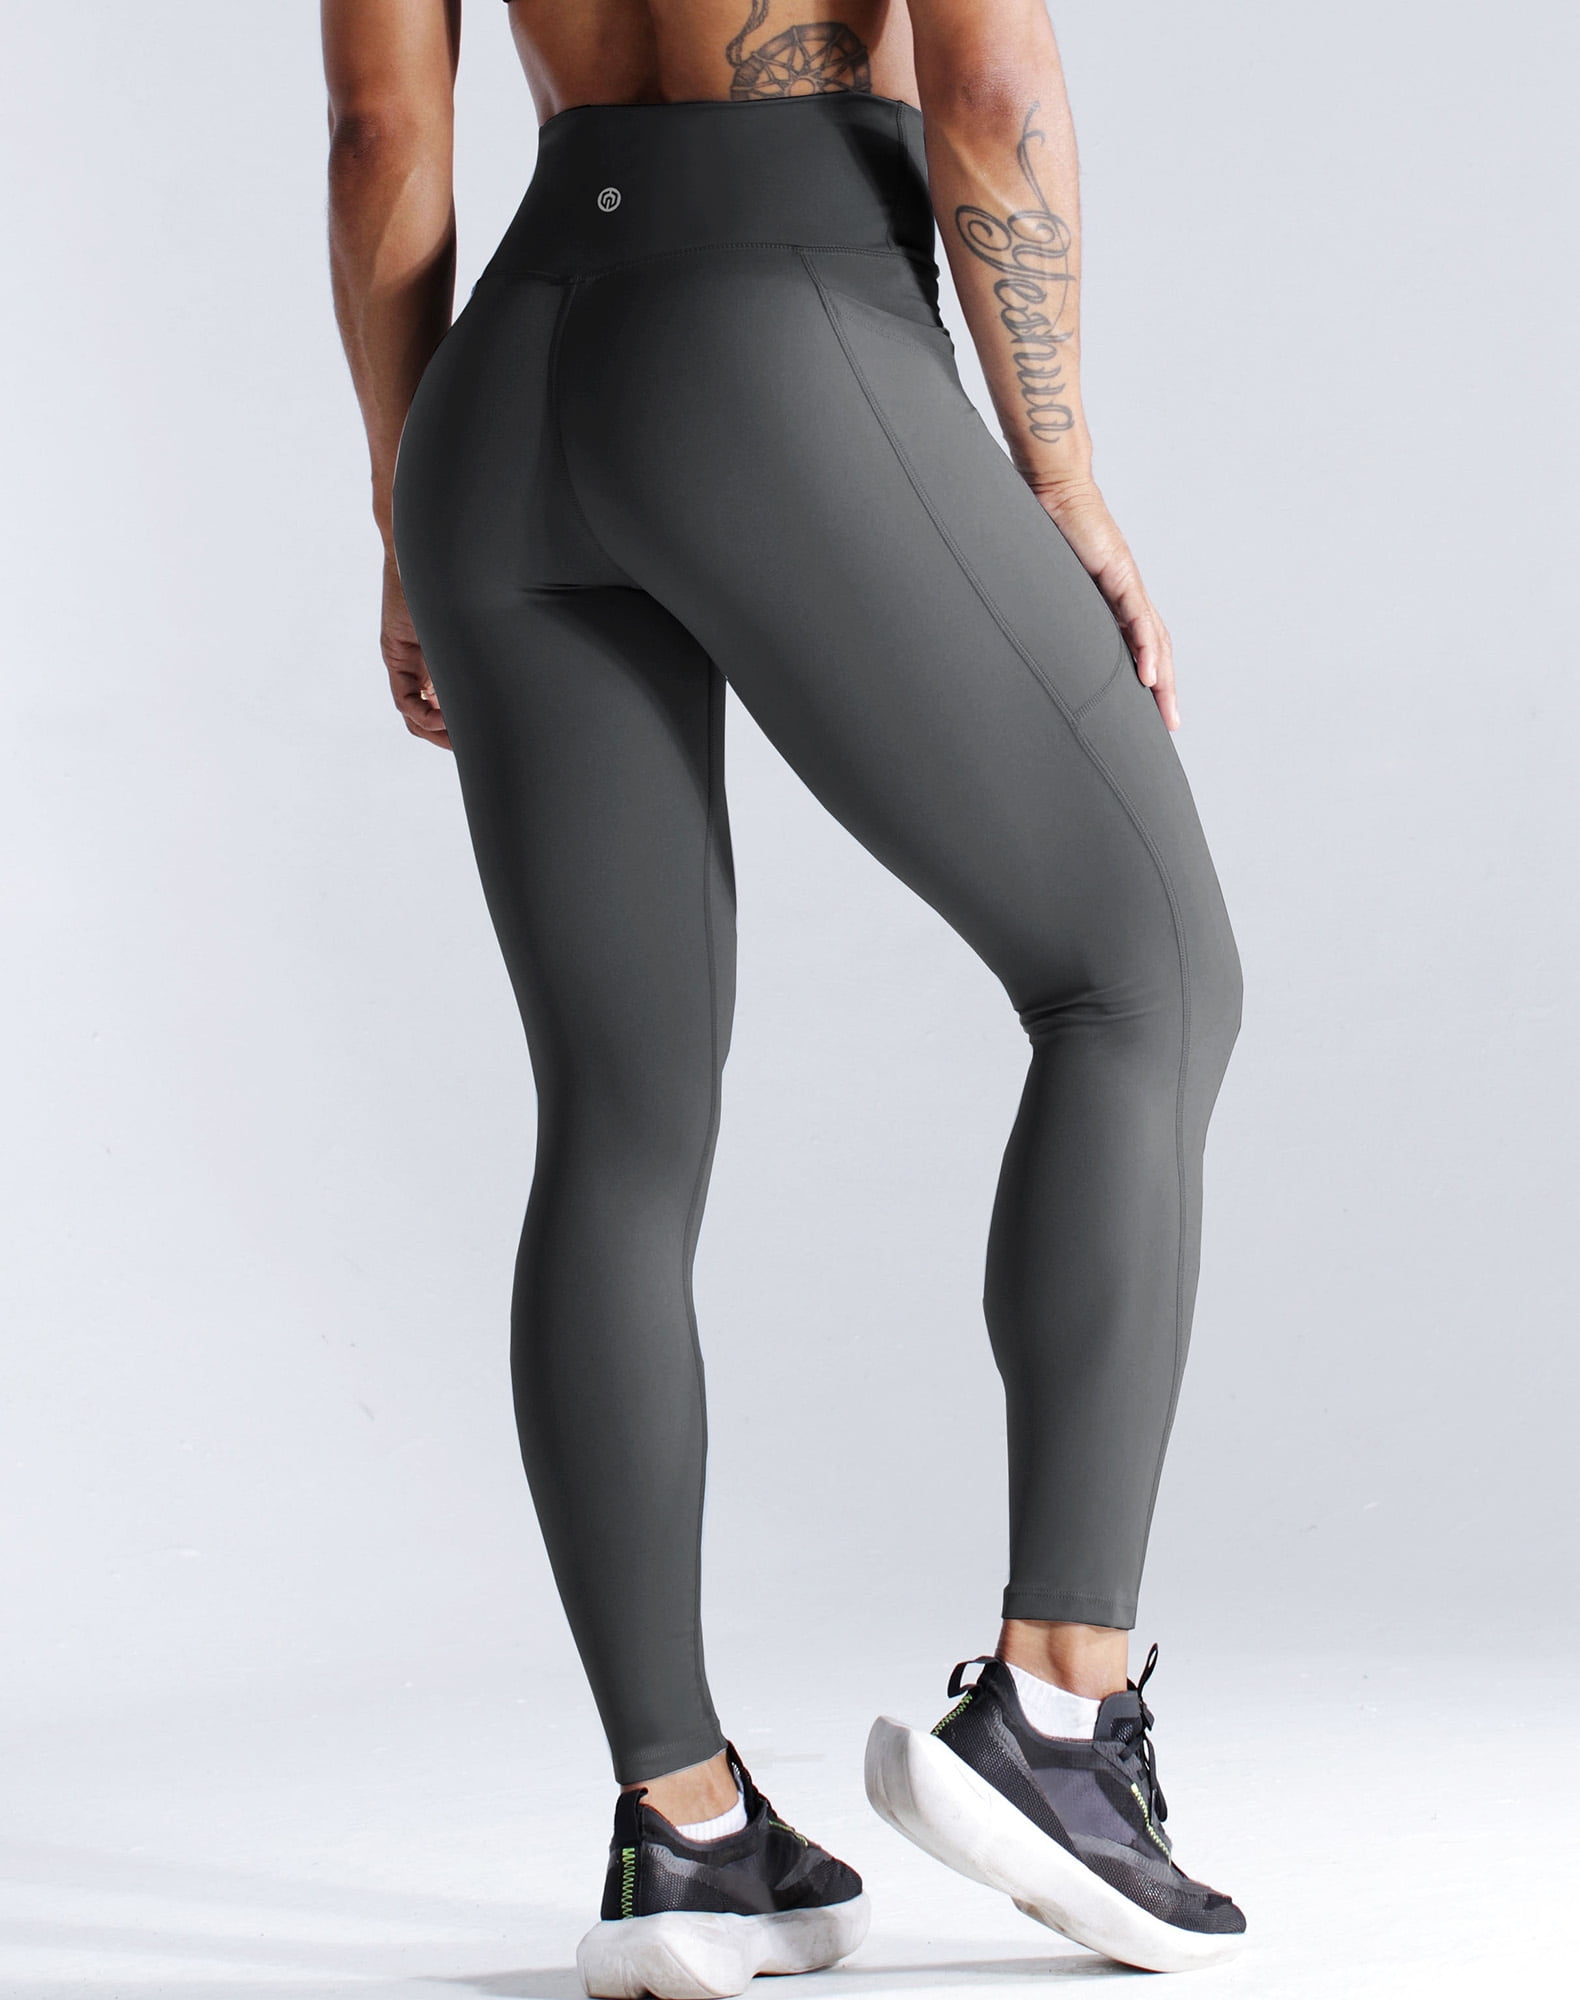 NELEUS Women's Yoga Pants Tummy Control High Waist Workout Leggings with 2  Pocket X-Large 127# Black,1 Piece